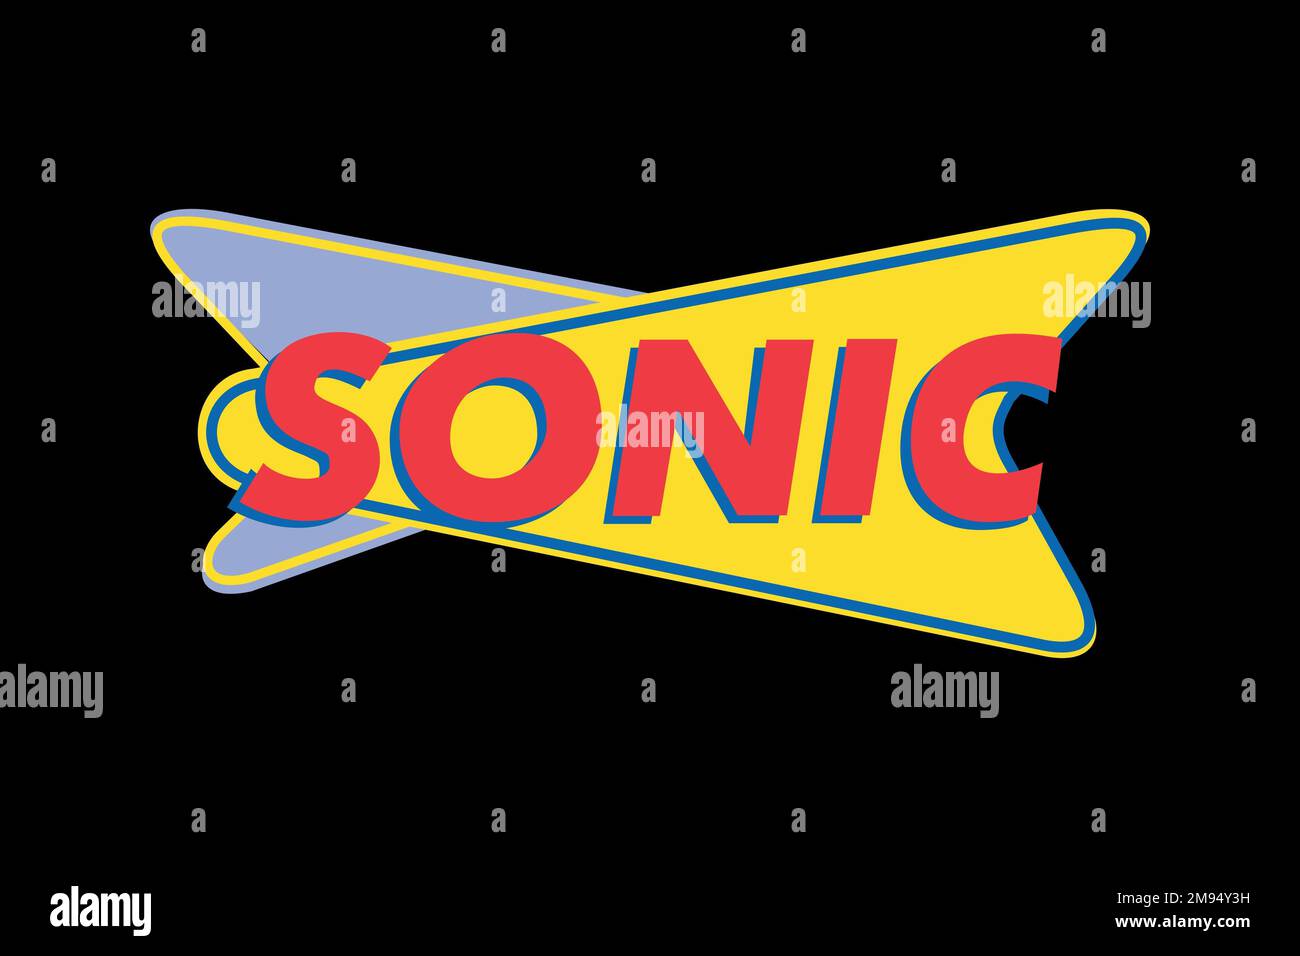 Sonic Drive In, Logo, Black Background Stock Photo Alamy